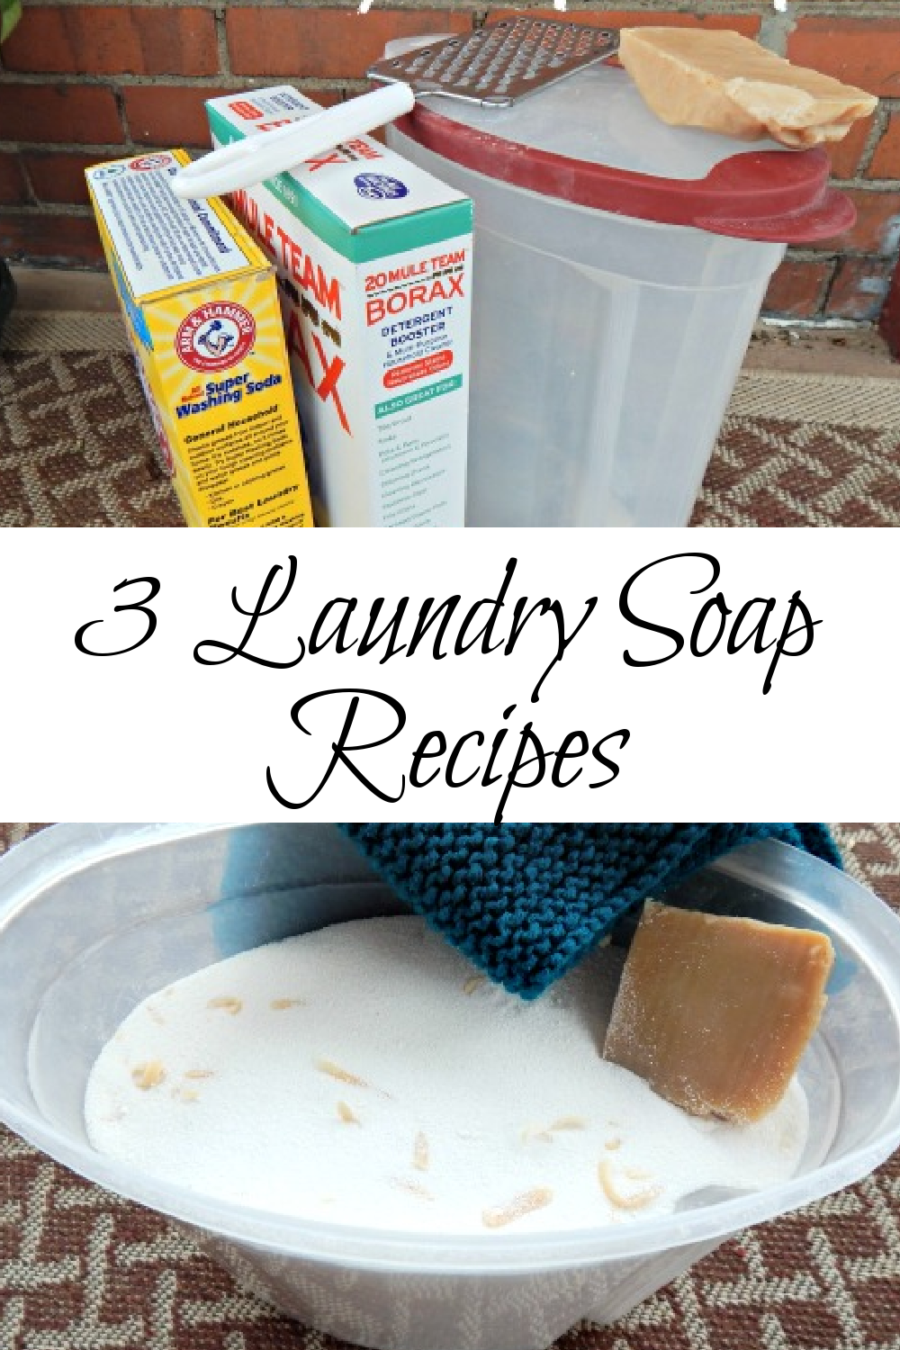 3 laundry soap recipes from Simple Life Mom